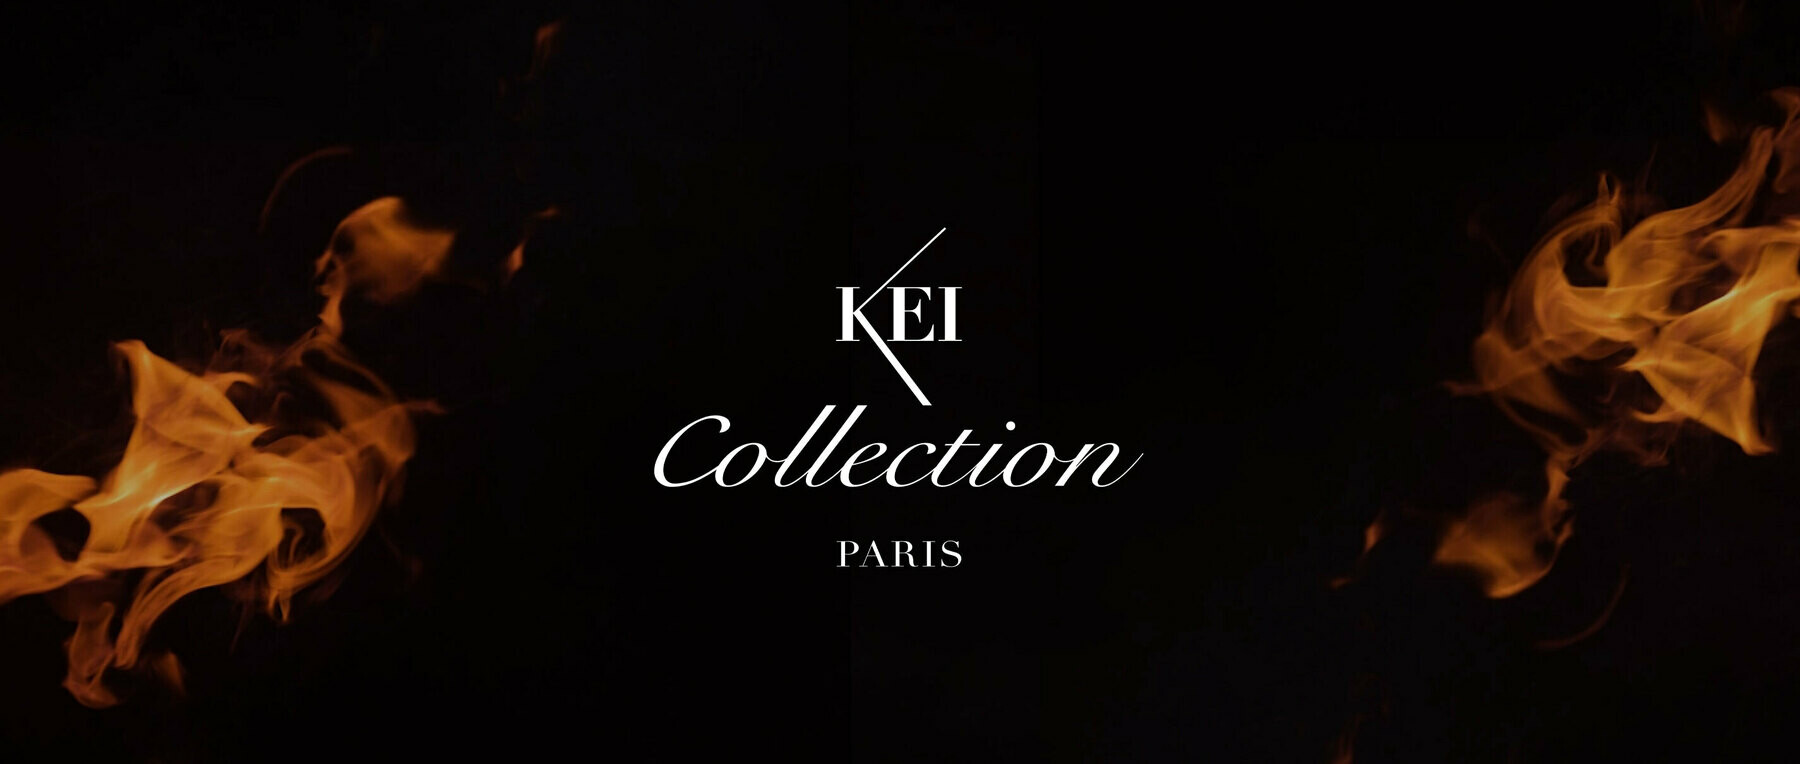 KEI Collection PARIS's images1